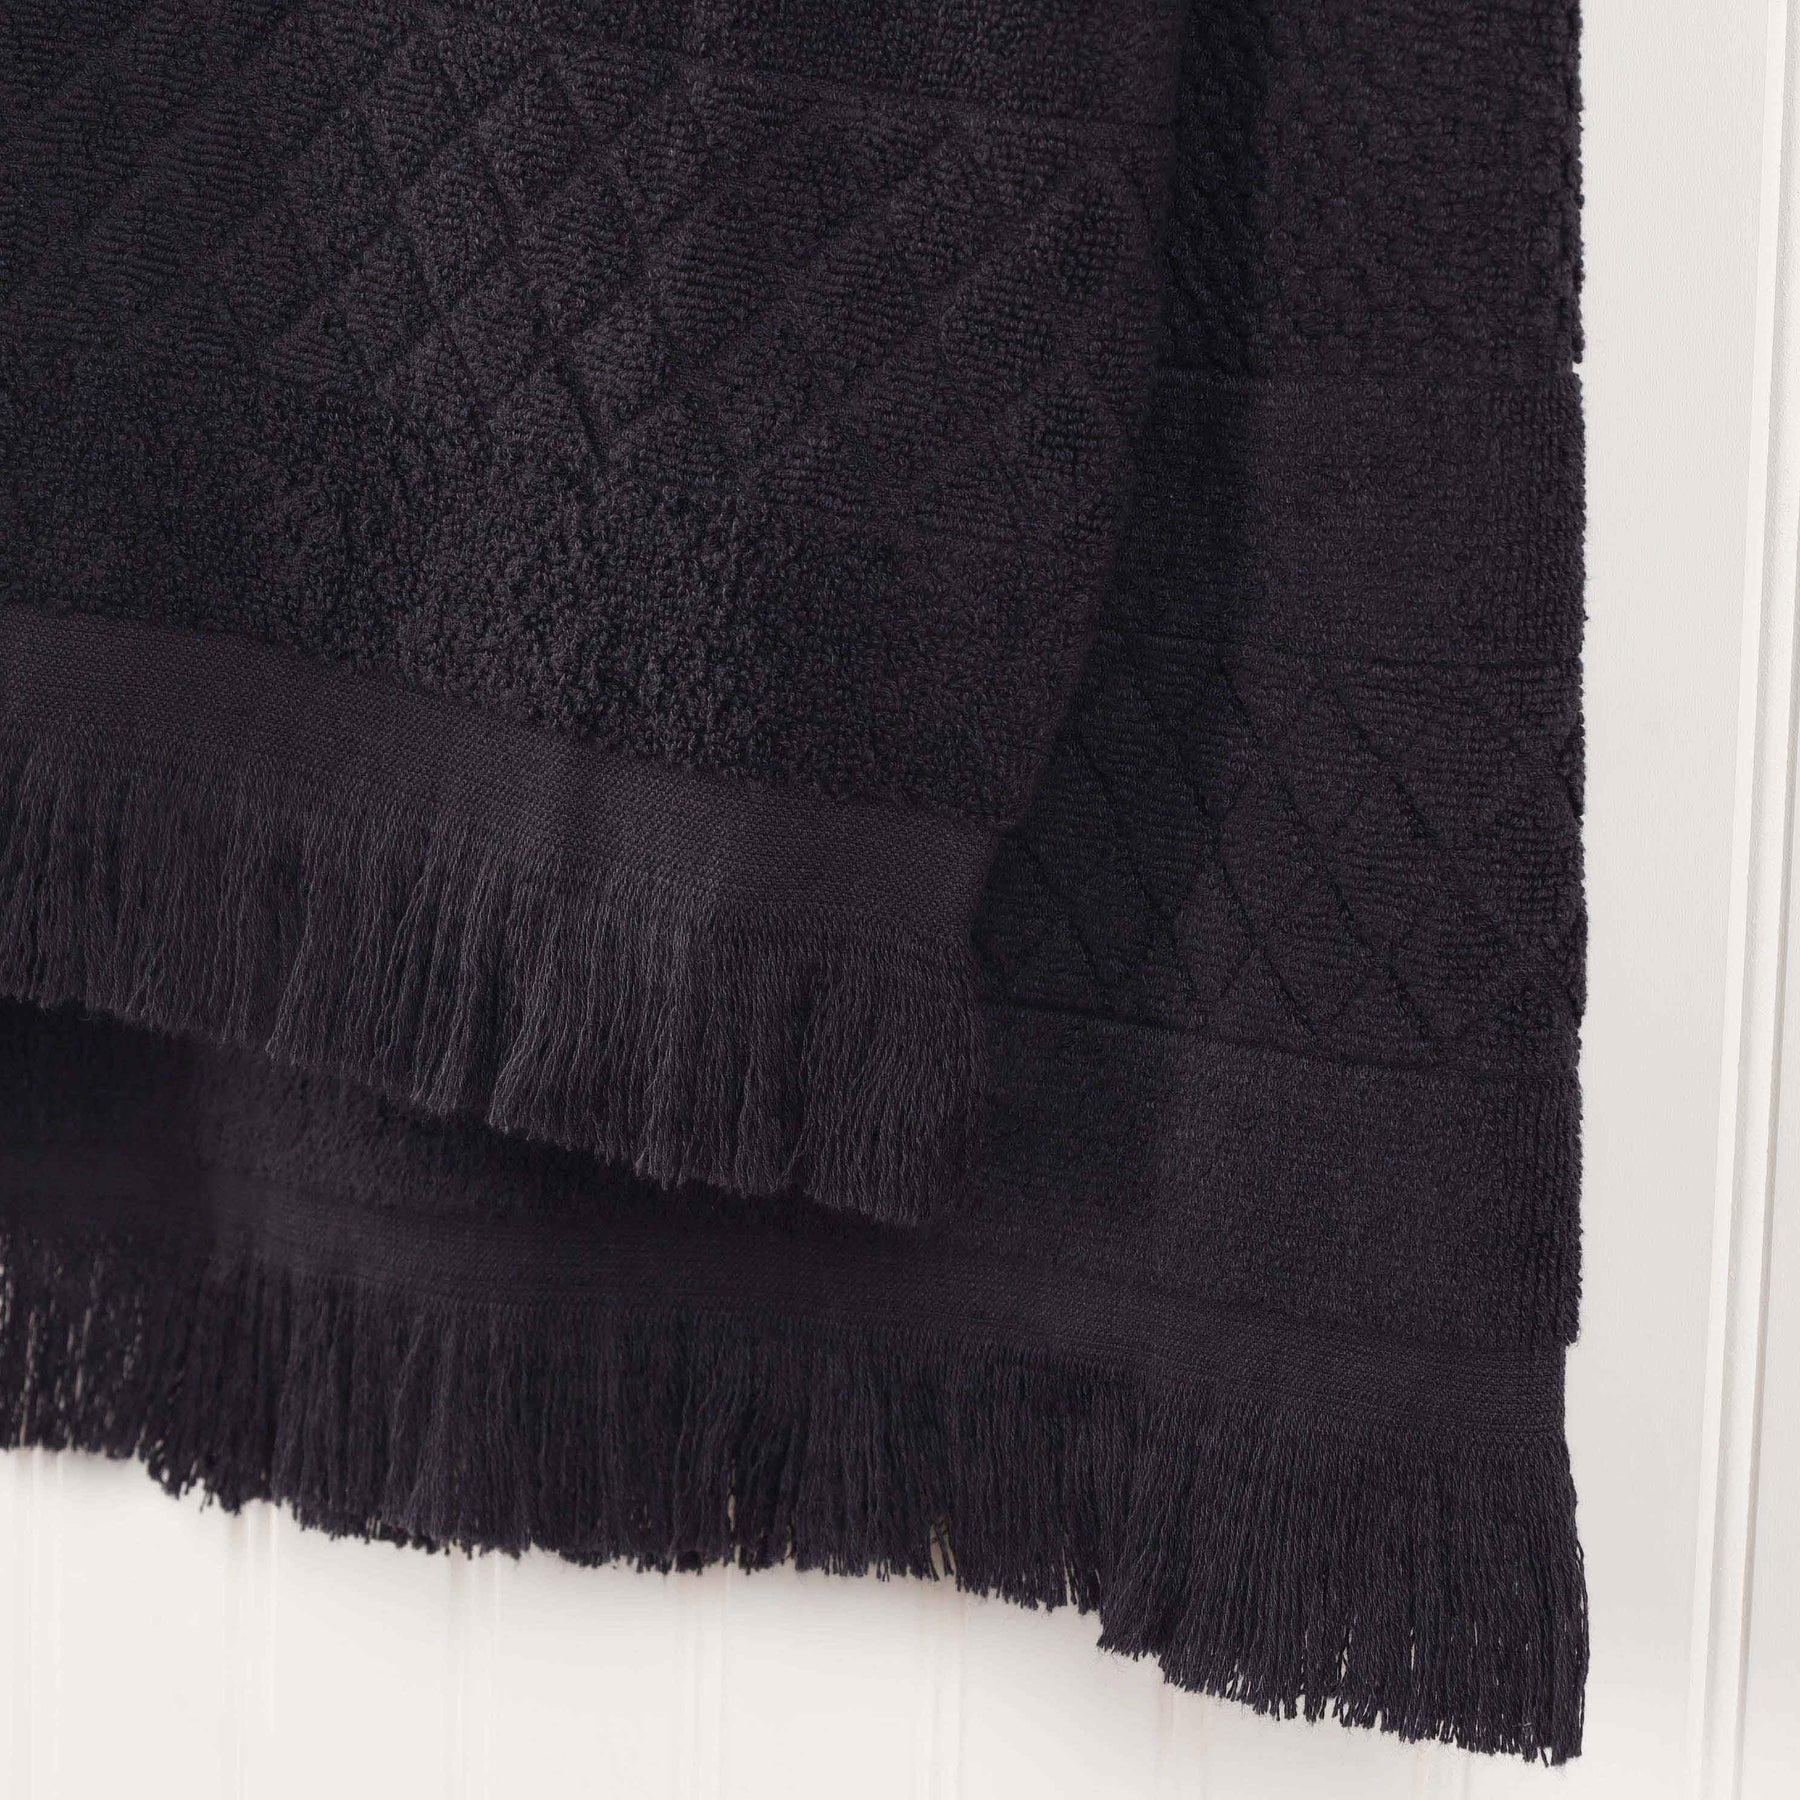 Rolla Cotton Geometric Jacquard Plush Absorbent Bath Sheet - Black